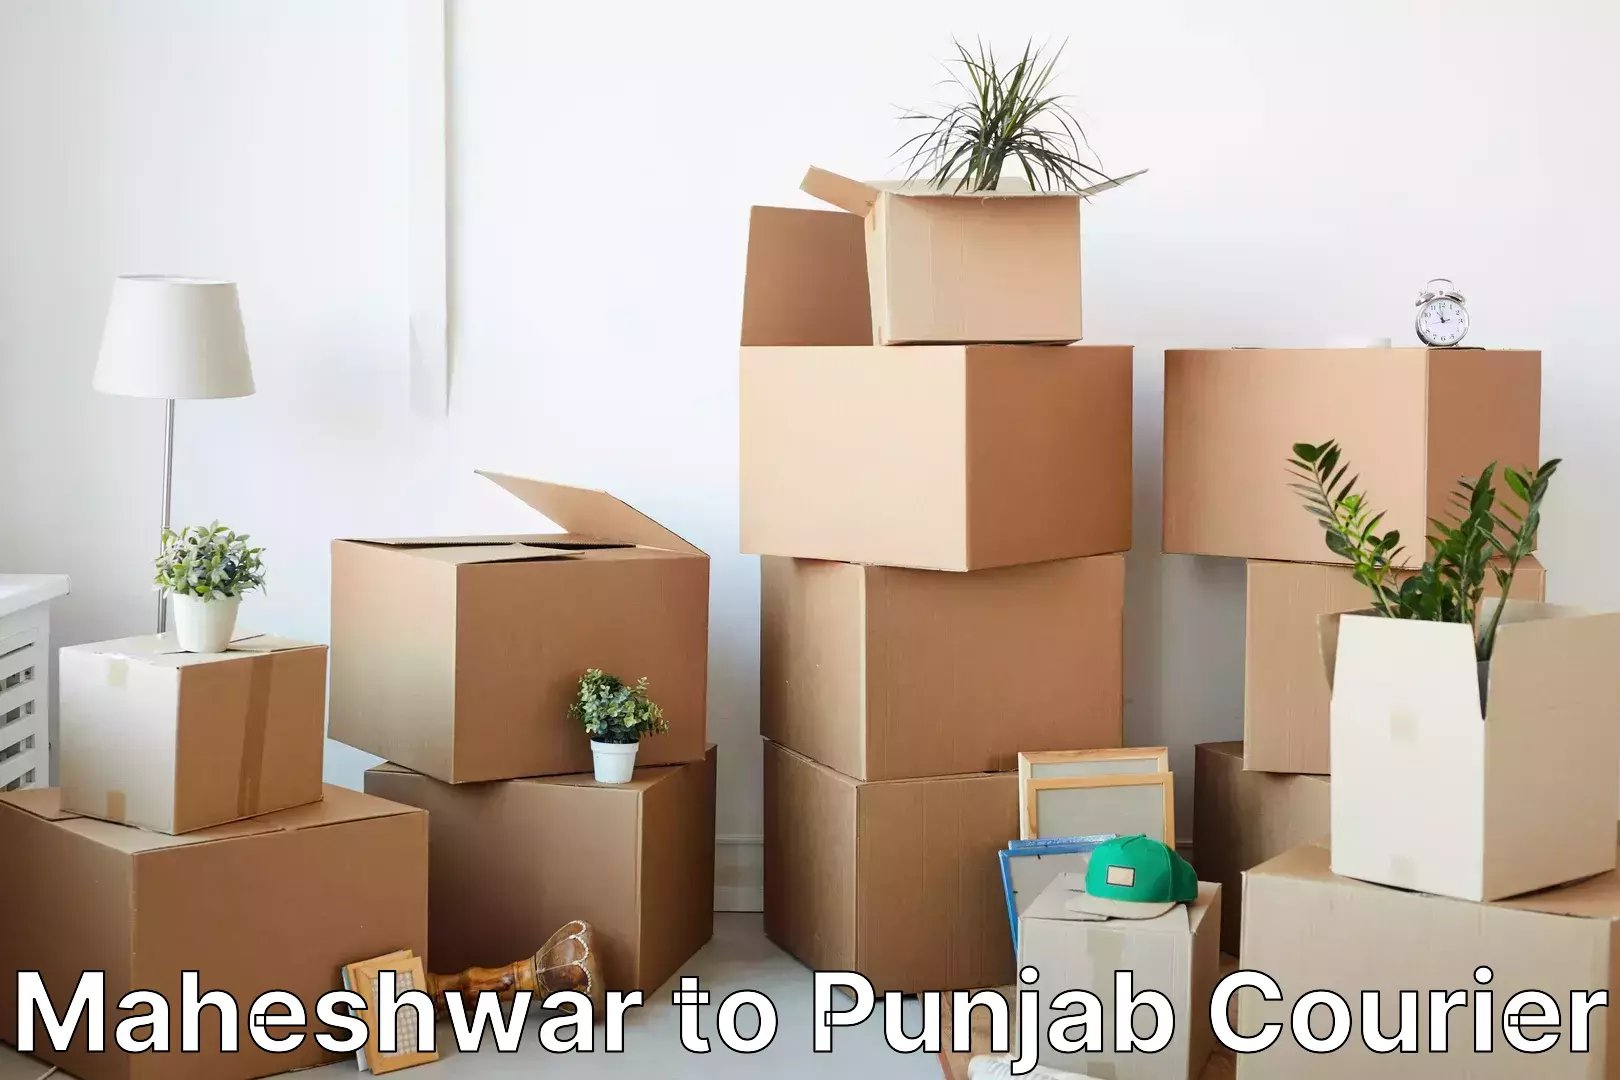 Courier service booking Maheshwar to Punjab